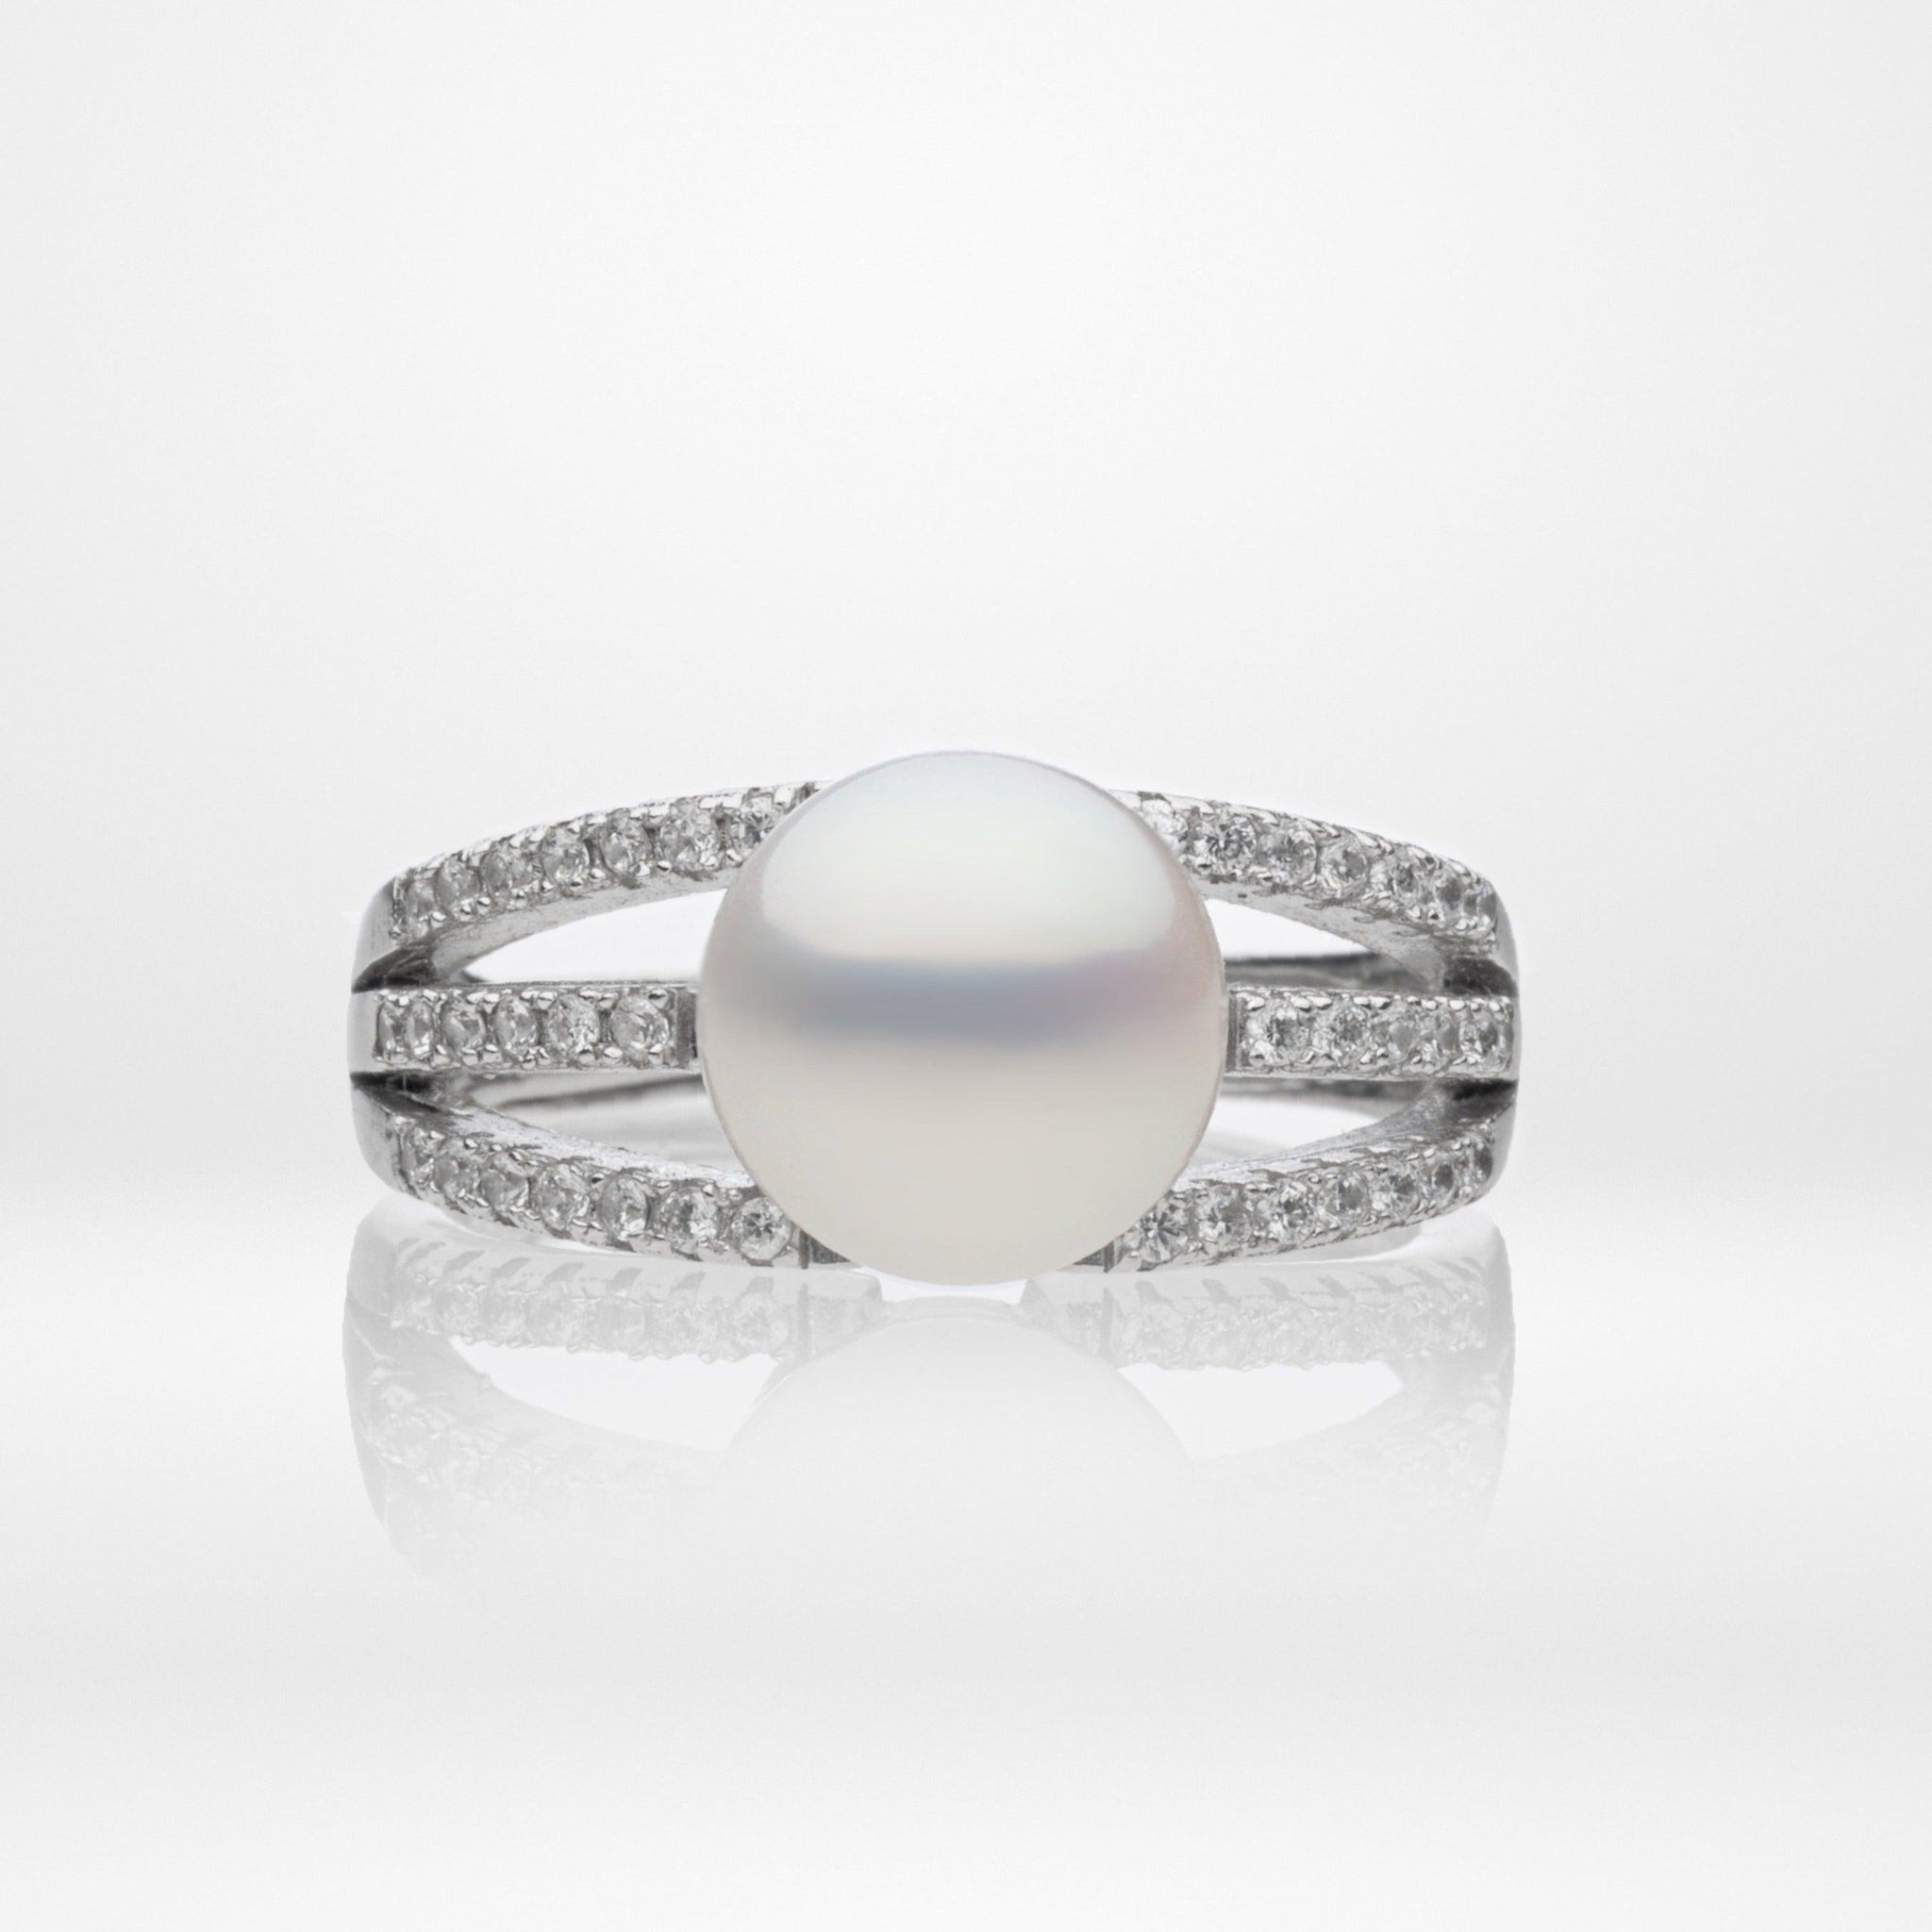 Angela Q Pearl Jewelry|High quality pearl Jewelry|Fine Jewelry